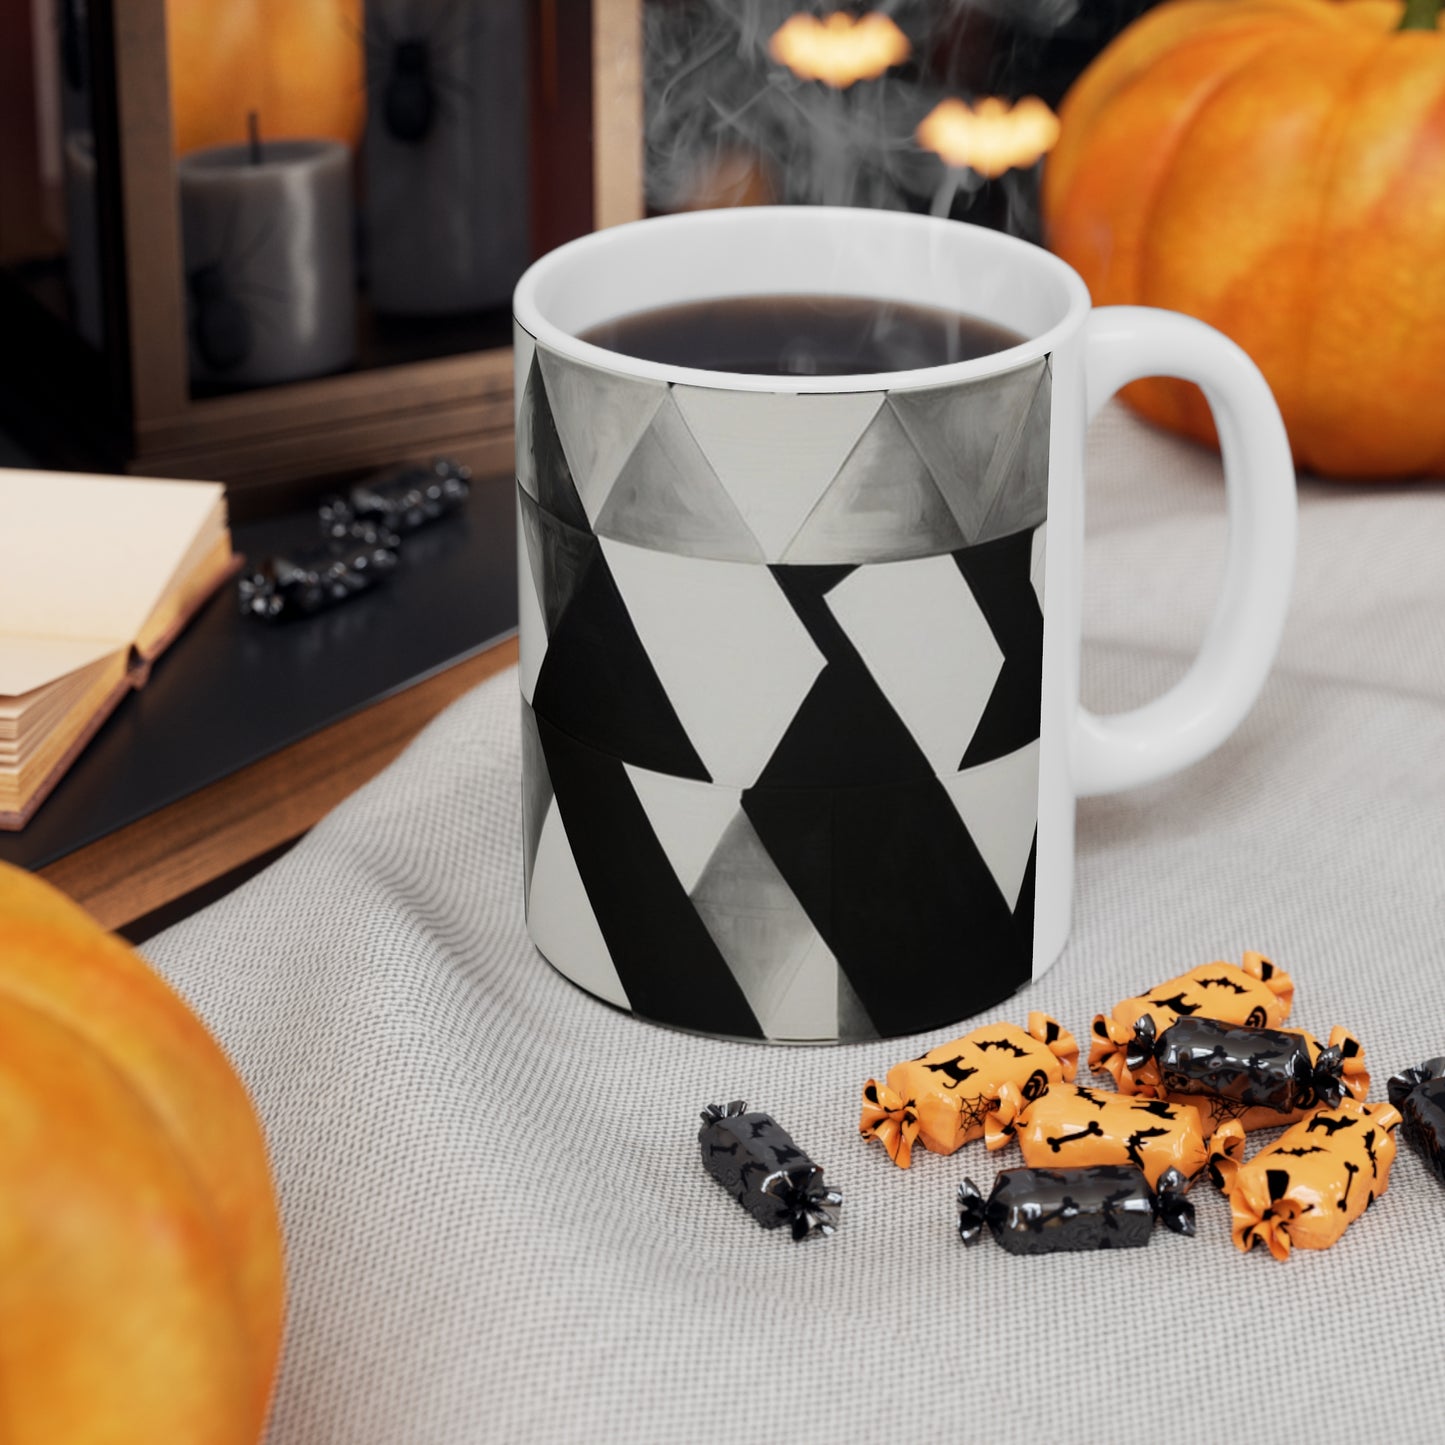 Black and White Patterns Mug - Ceramic Coffee Mug 11oz